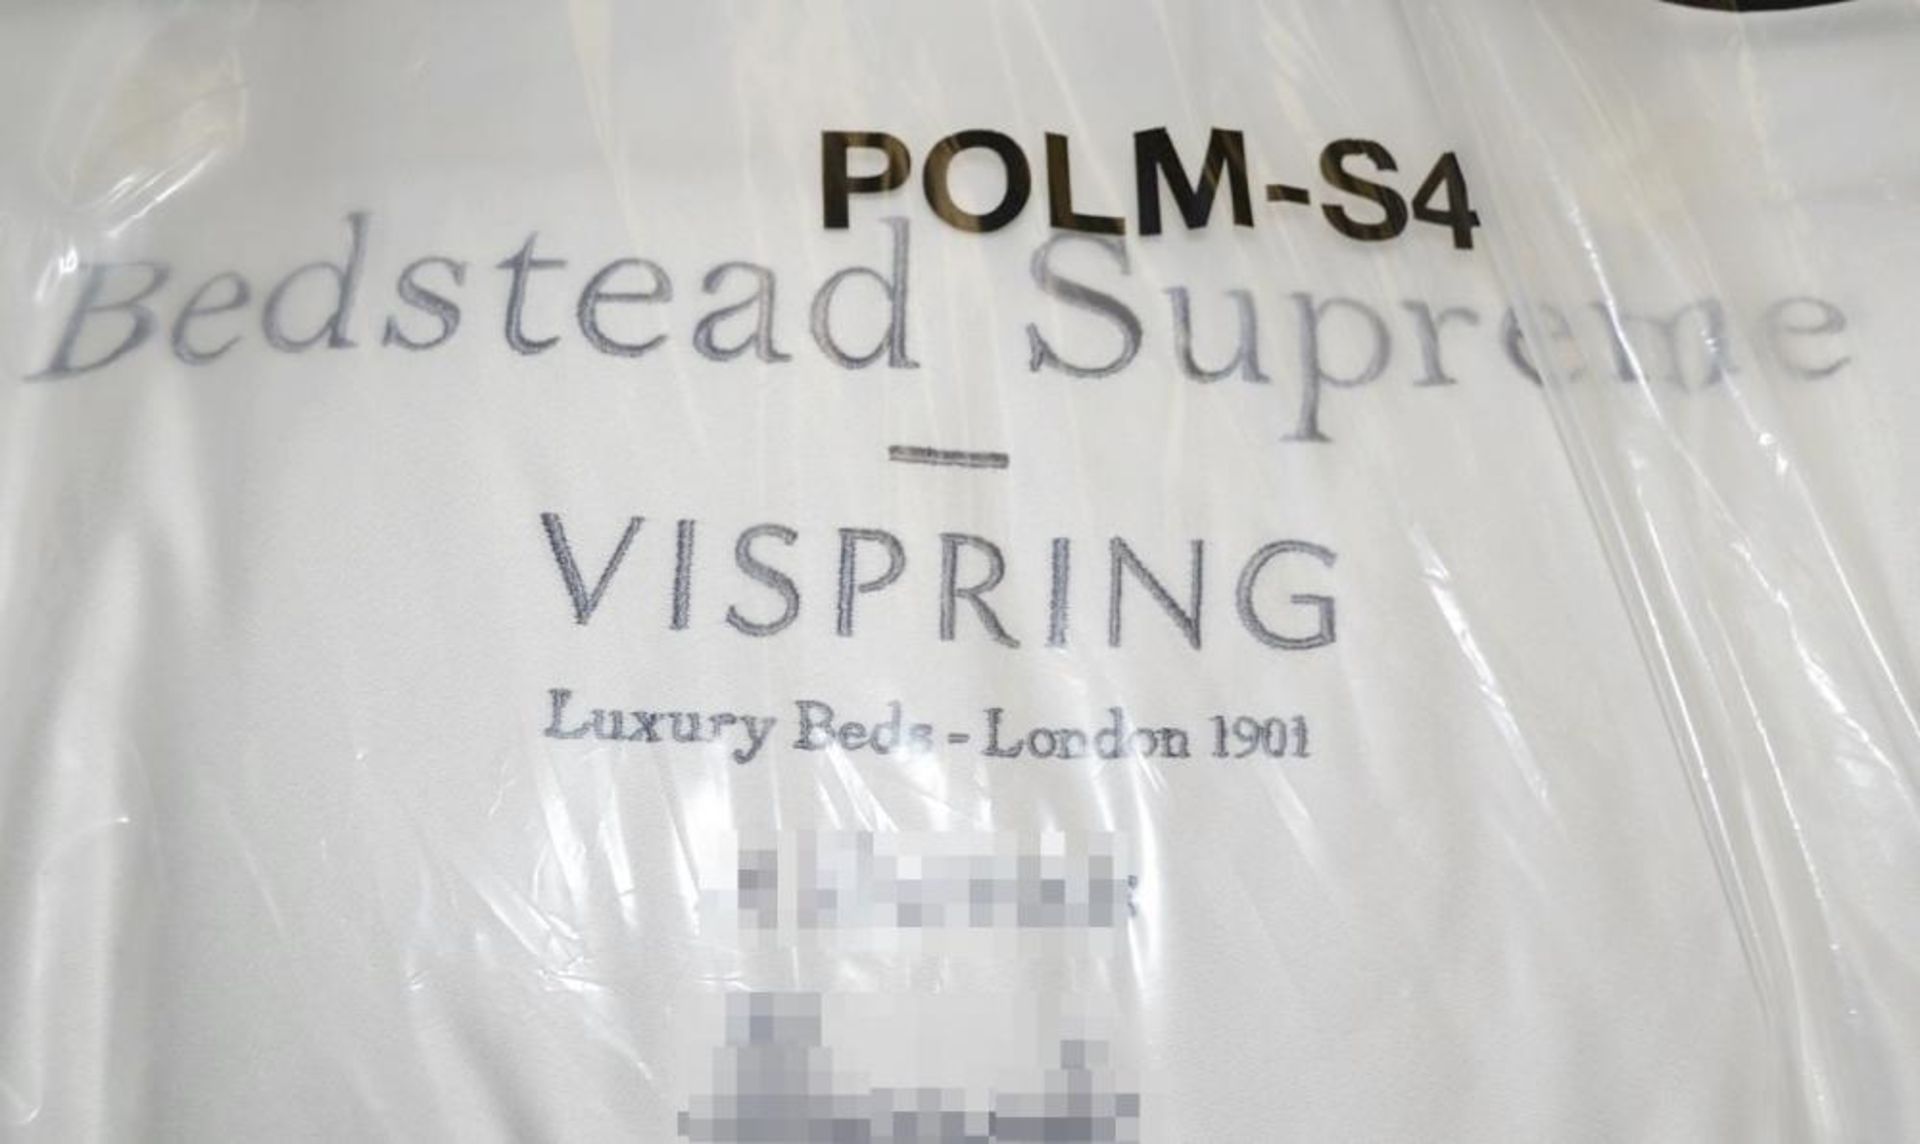 1 x Vispring 'Bedstead Supreme' Luxury FIRM Mattress - Size: 175 x 200 x 23cm - British Made - Image 5 of 10